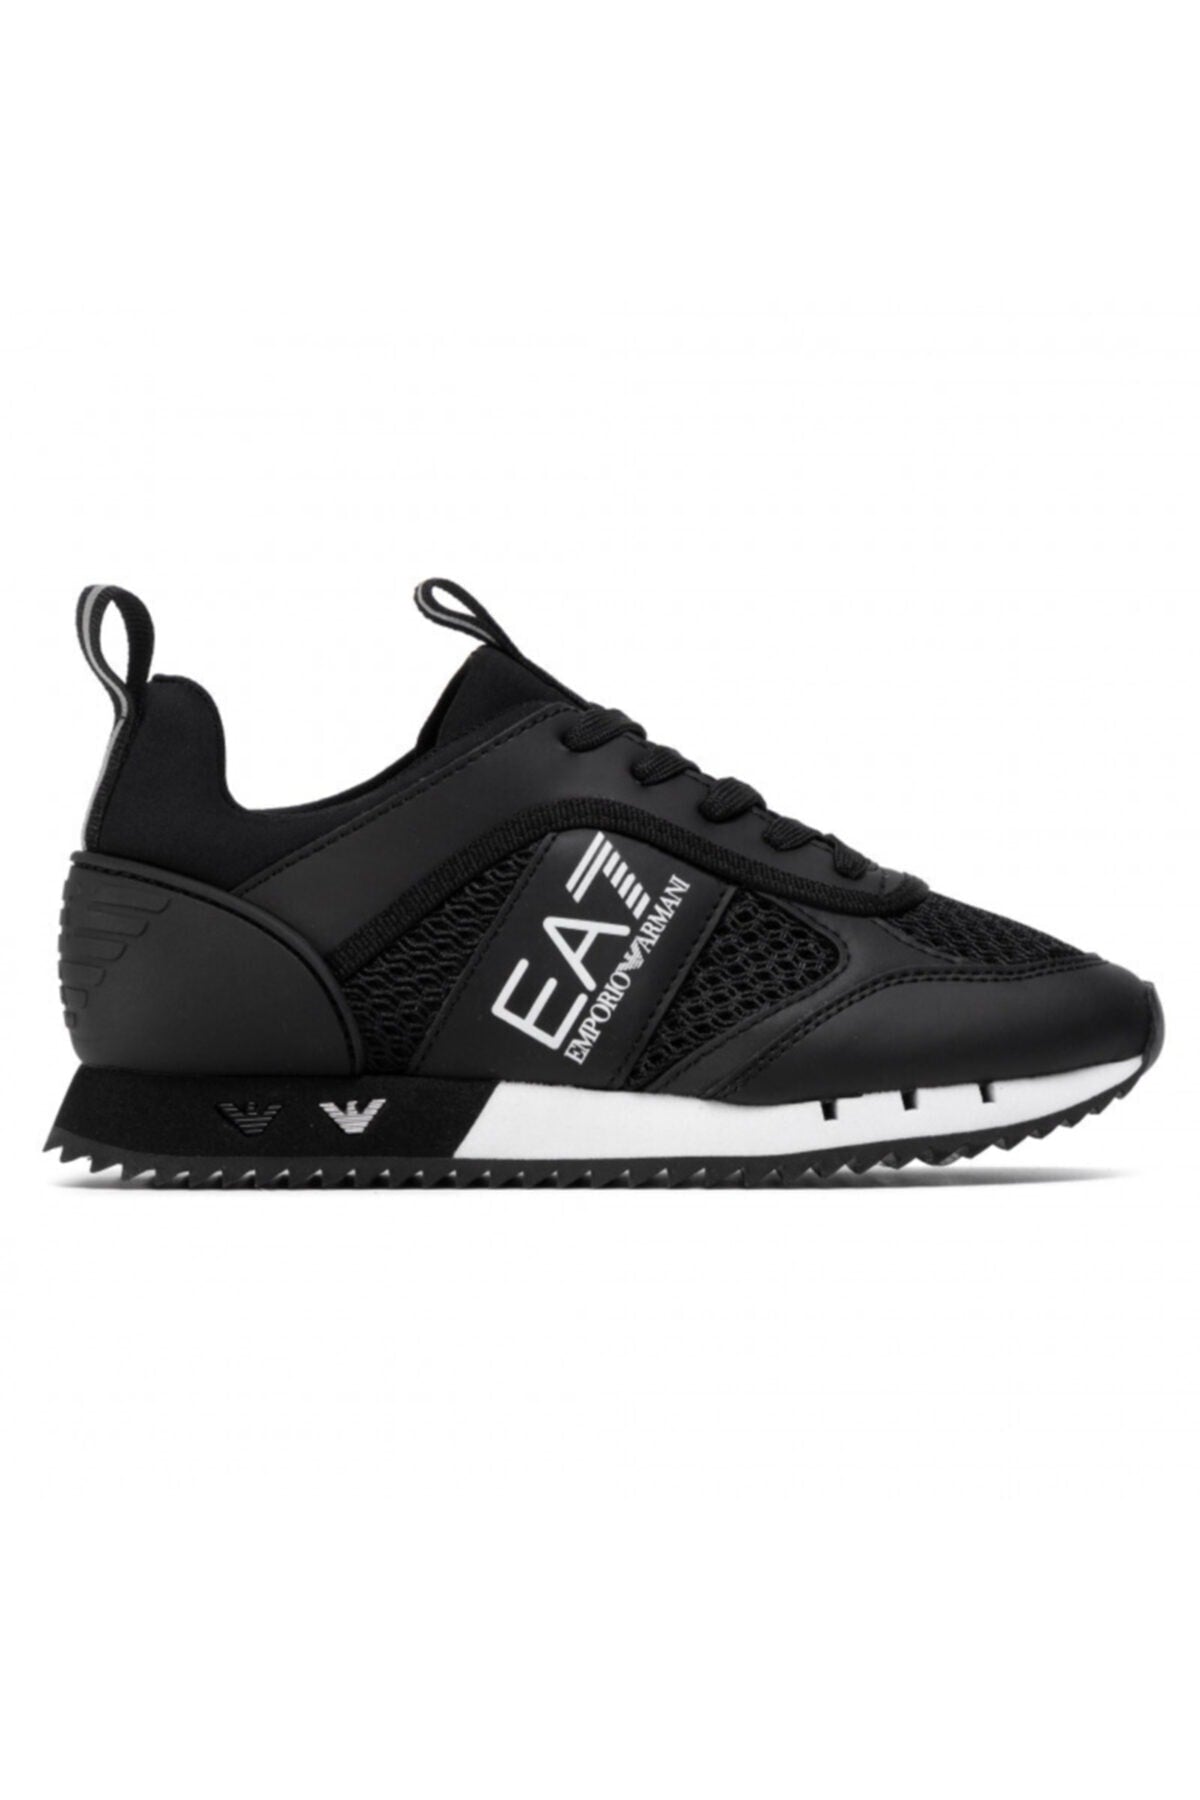 Black - Emporio Armani Men's Shoes X8x027-xk050-a120